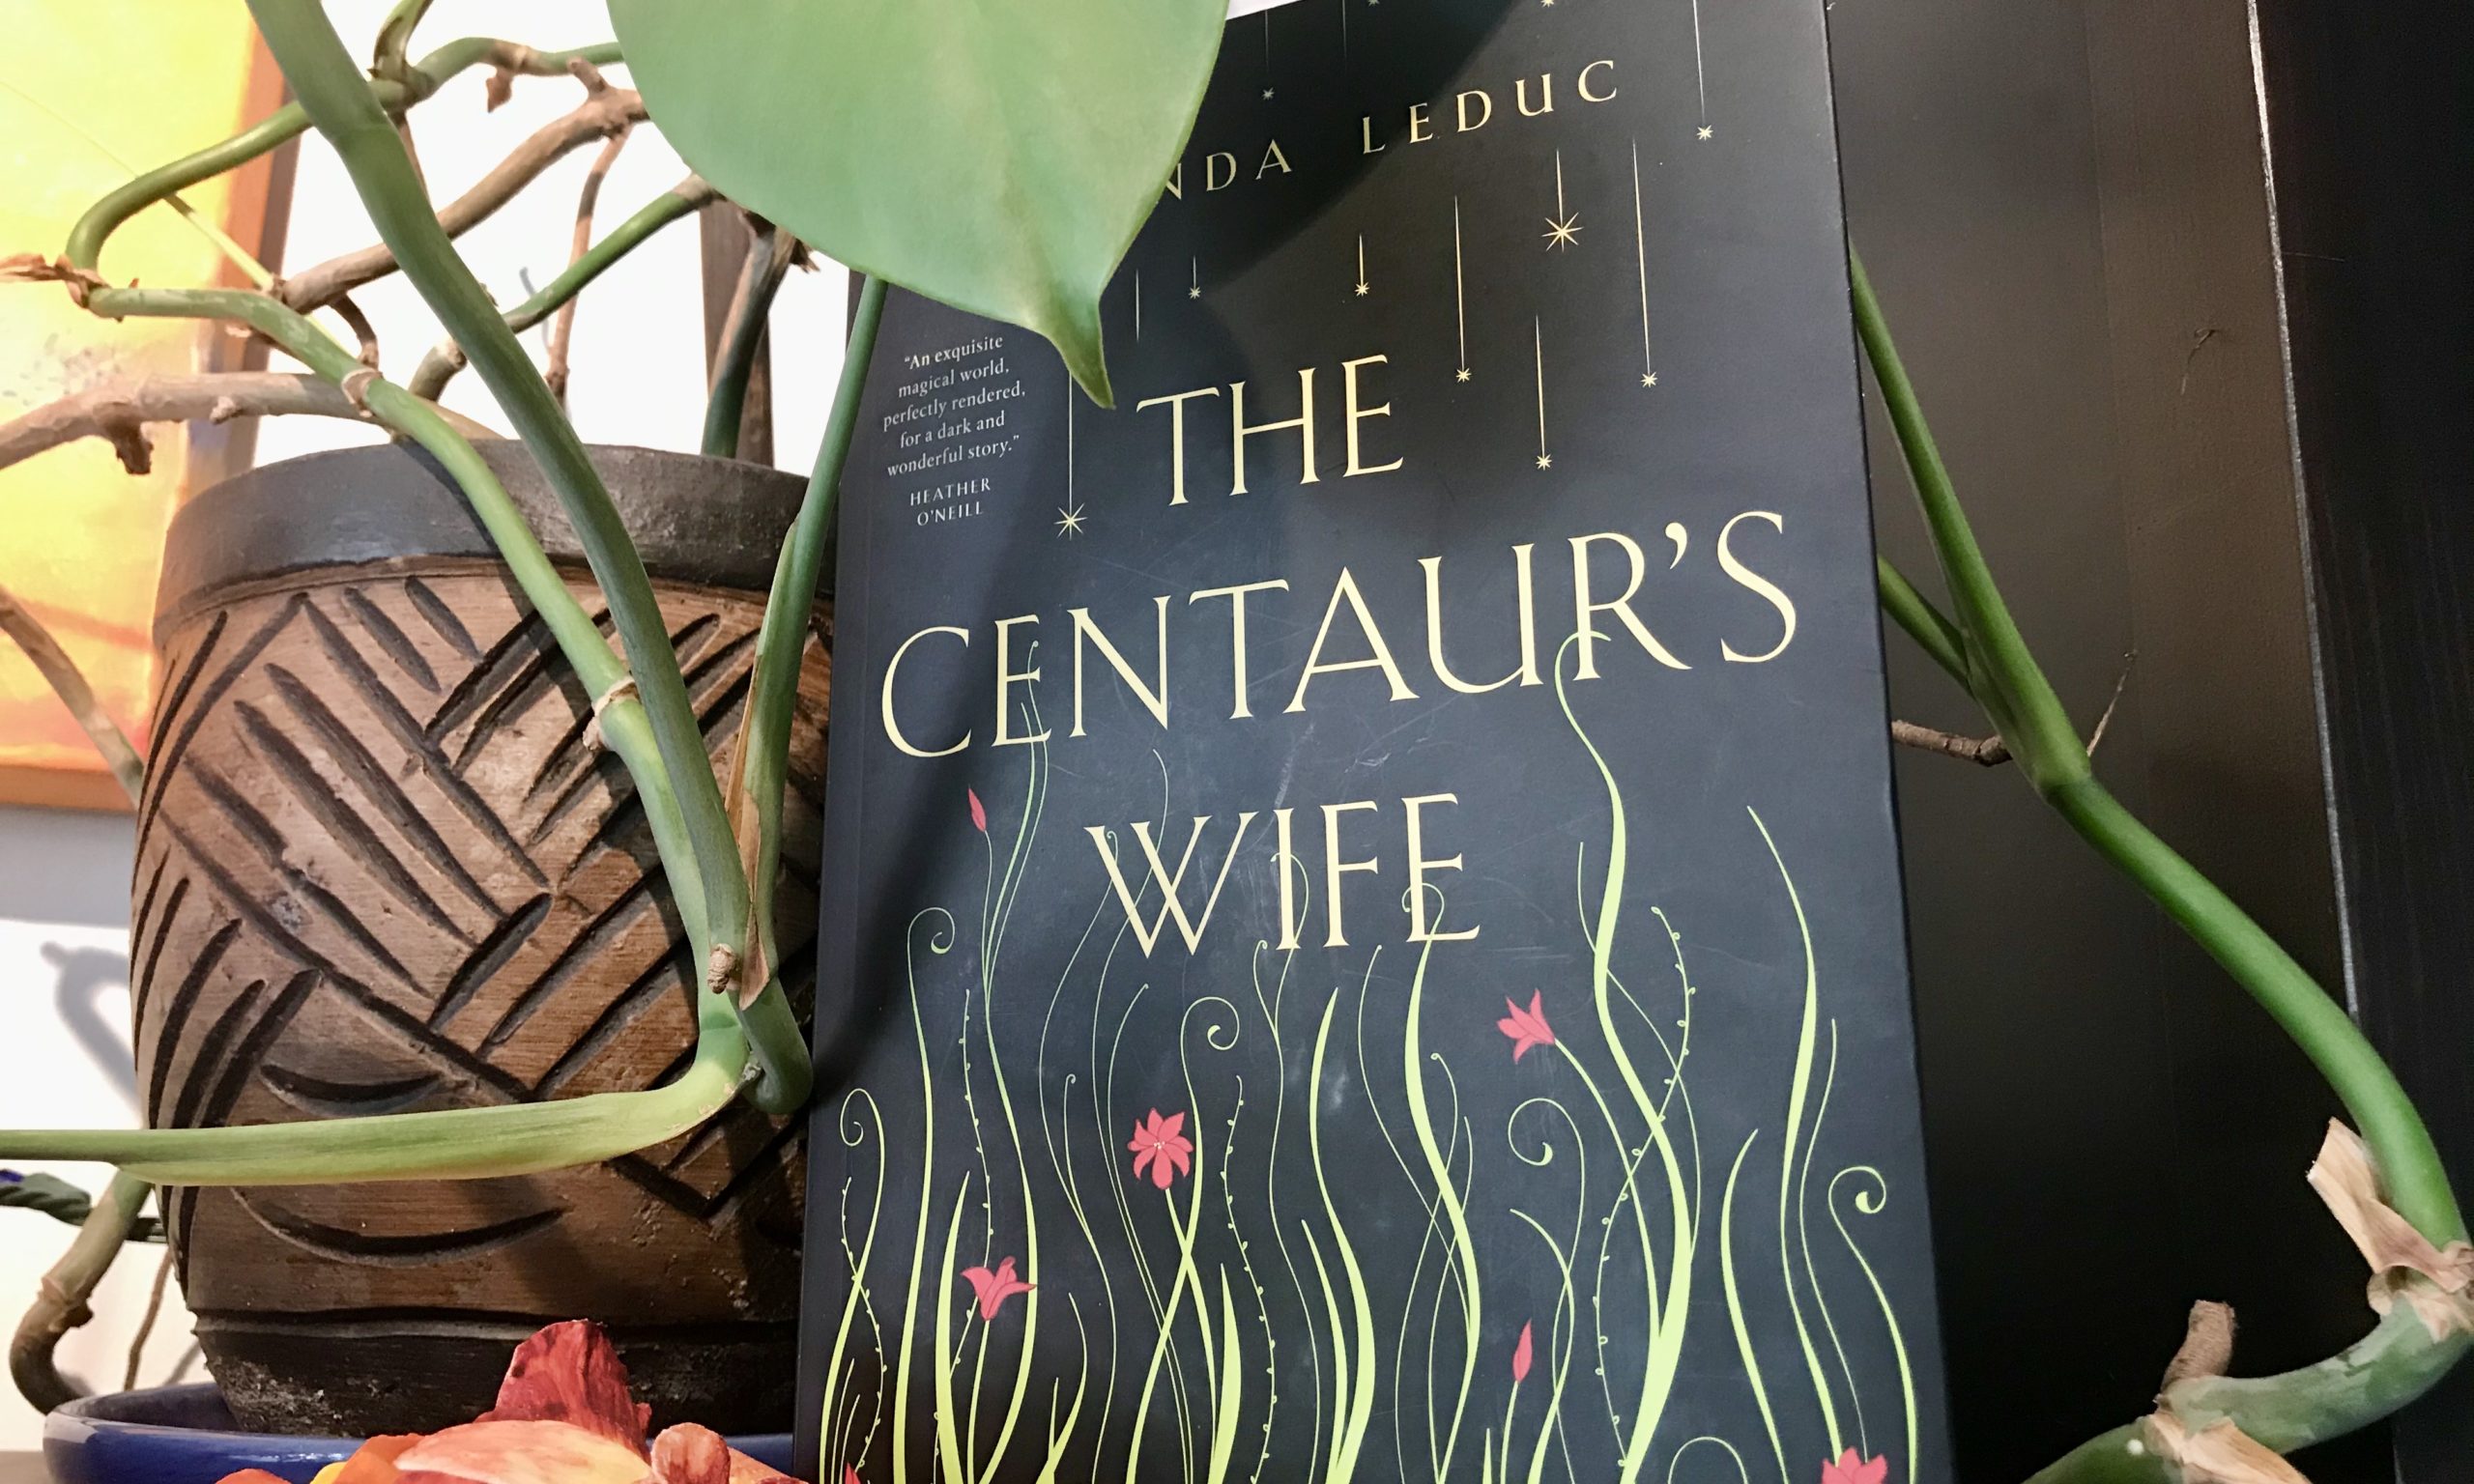 The Centaur’s Wife by Amanda Leduc